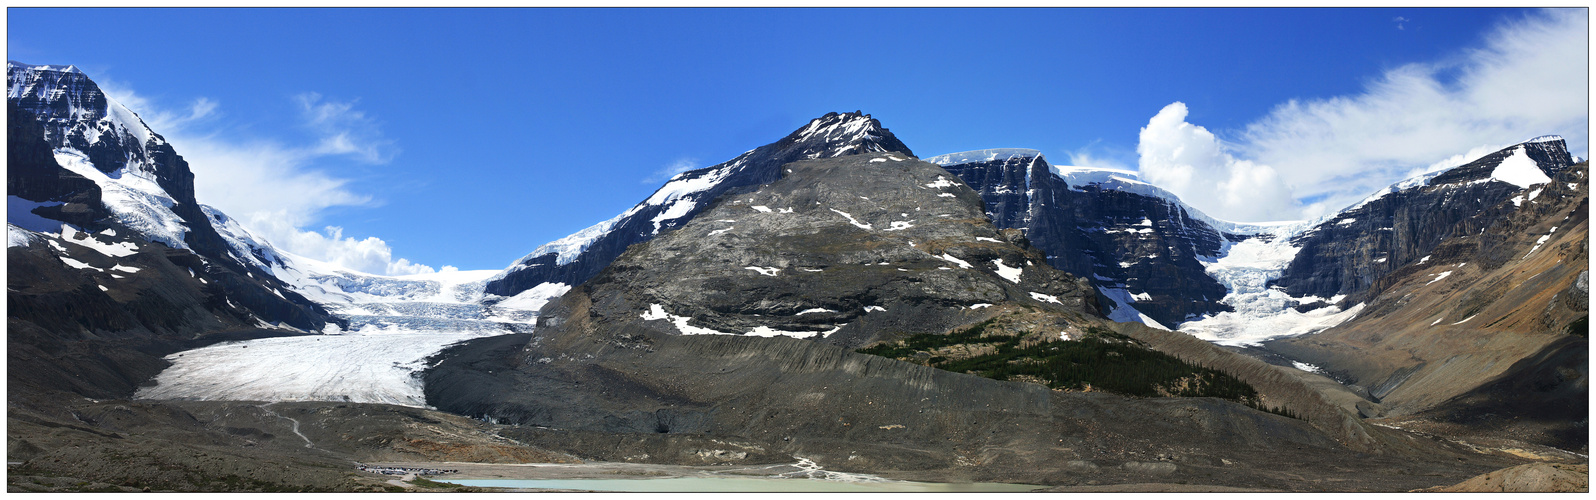 Athabasca Glacier and Snowdome, Columbia Icefield, Alberta